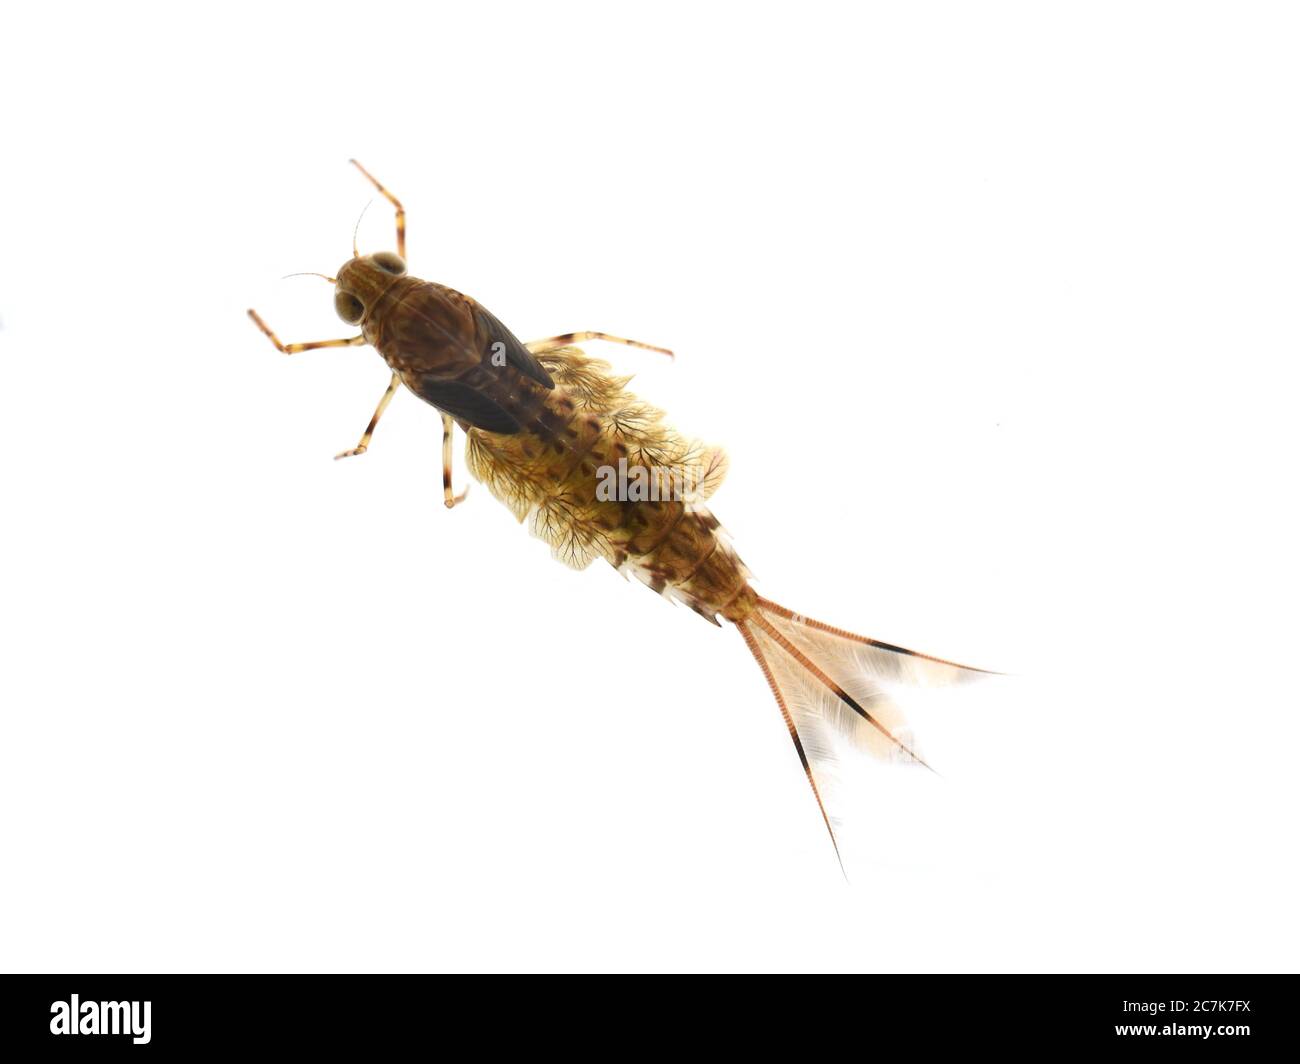 Nymph of the mayfly siphlonurus aestivalis isolated on white background Stock Photo